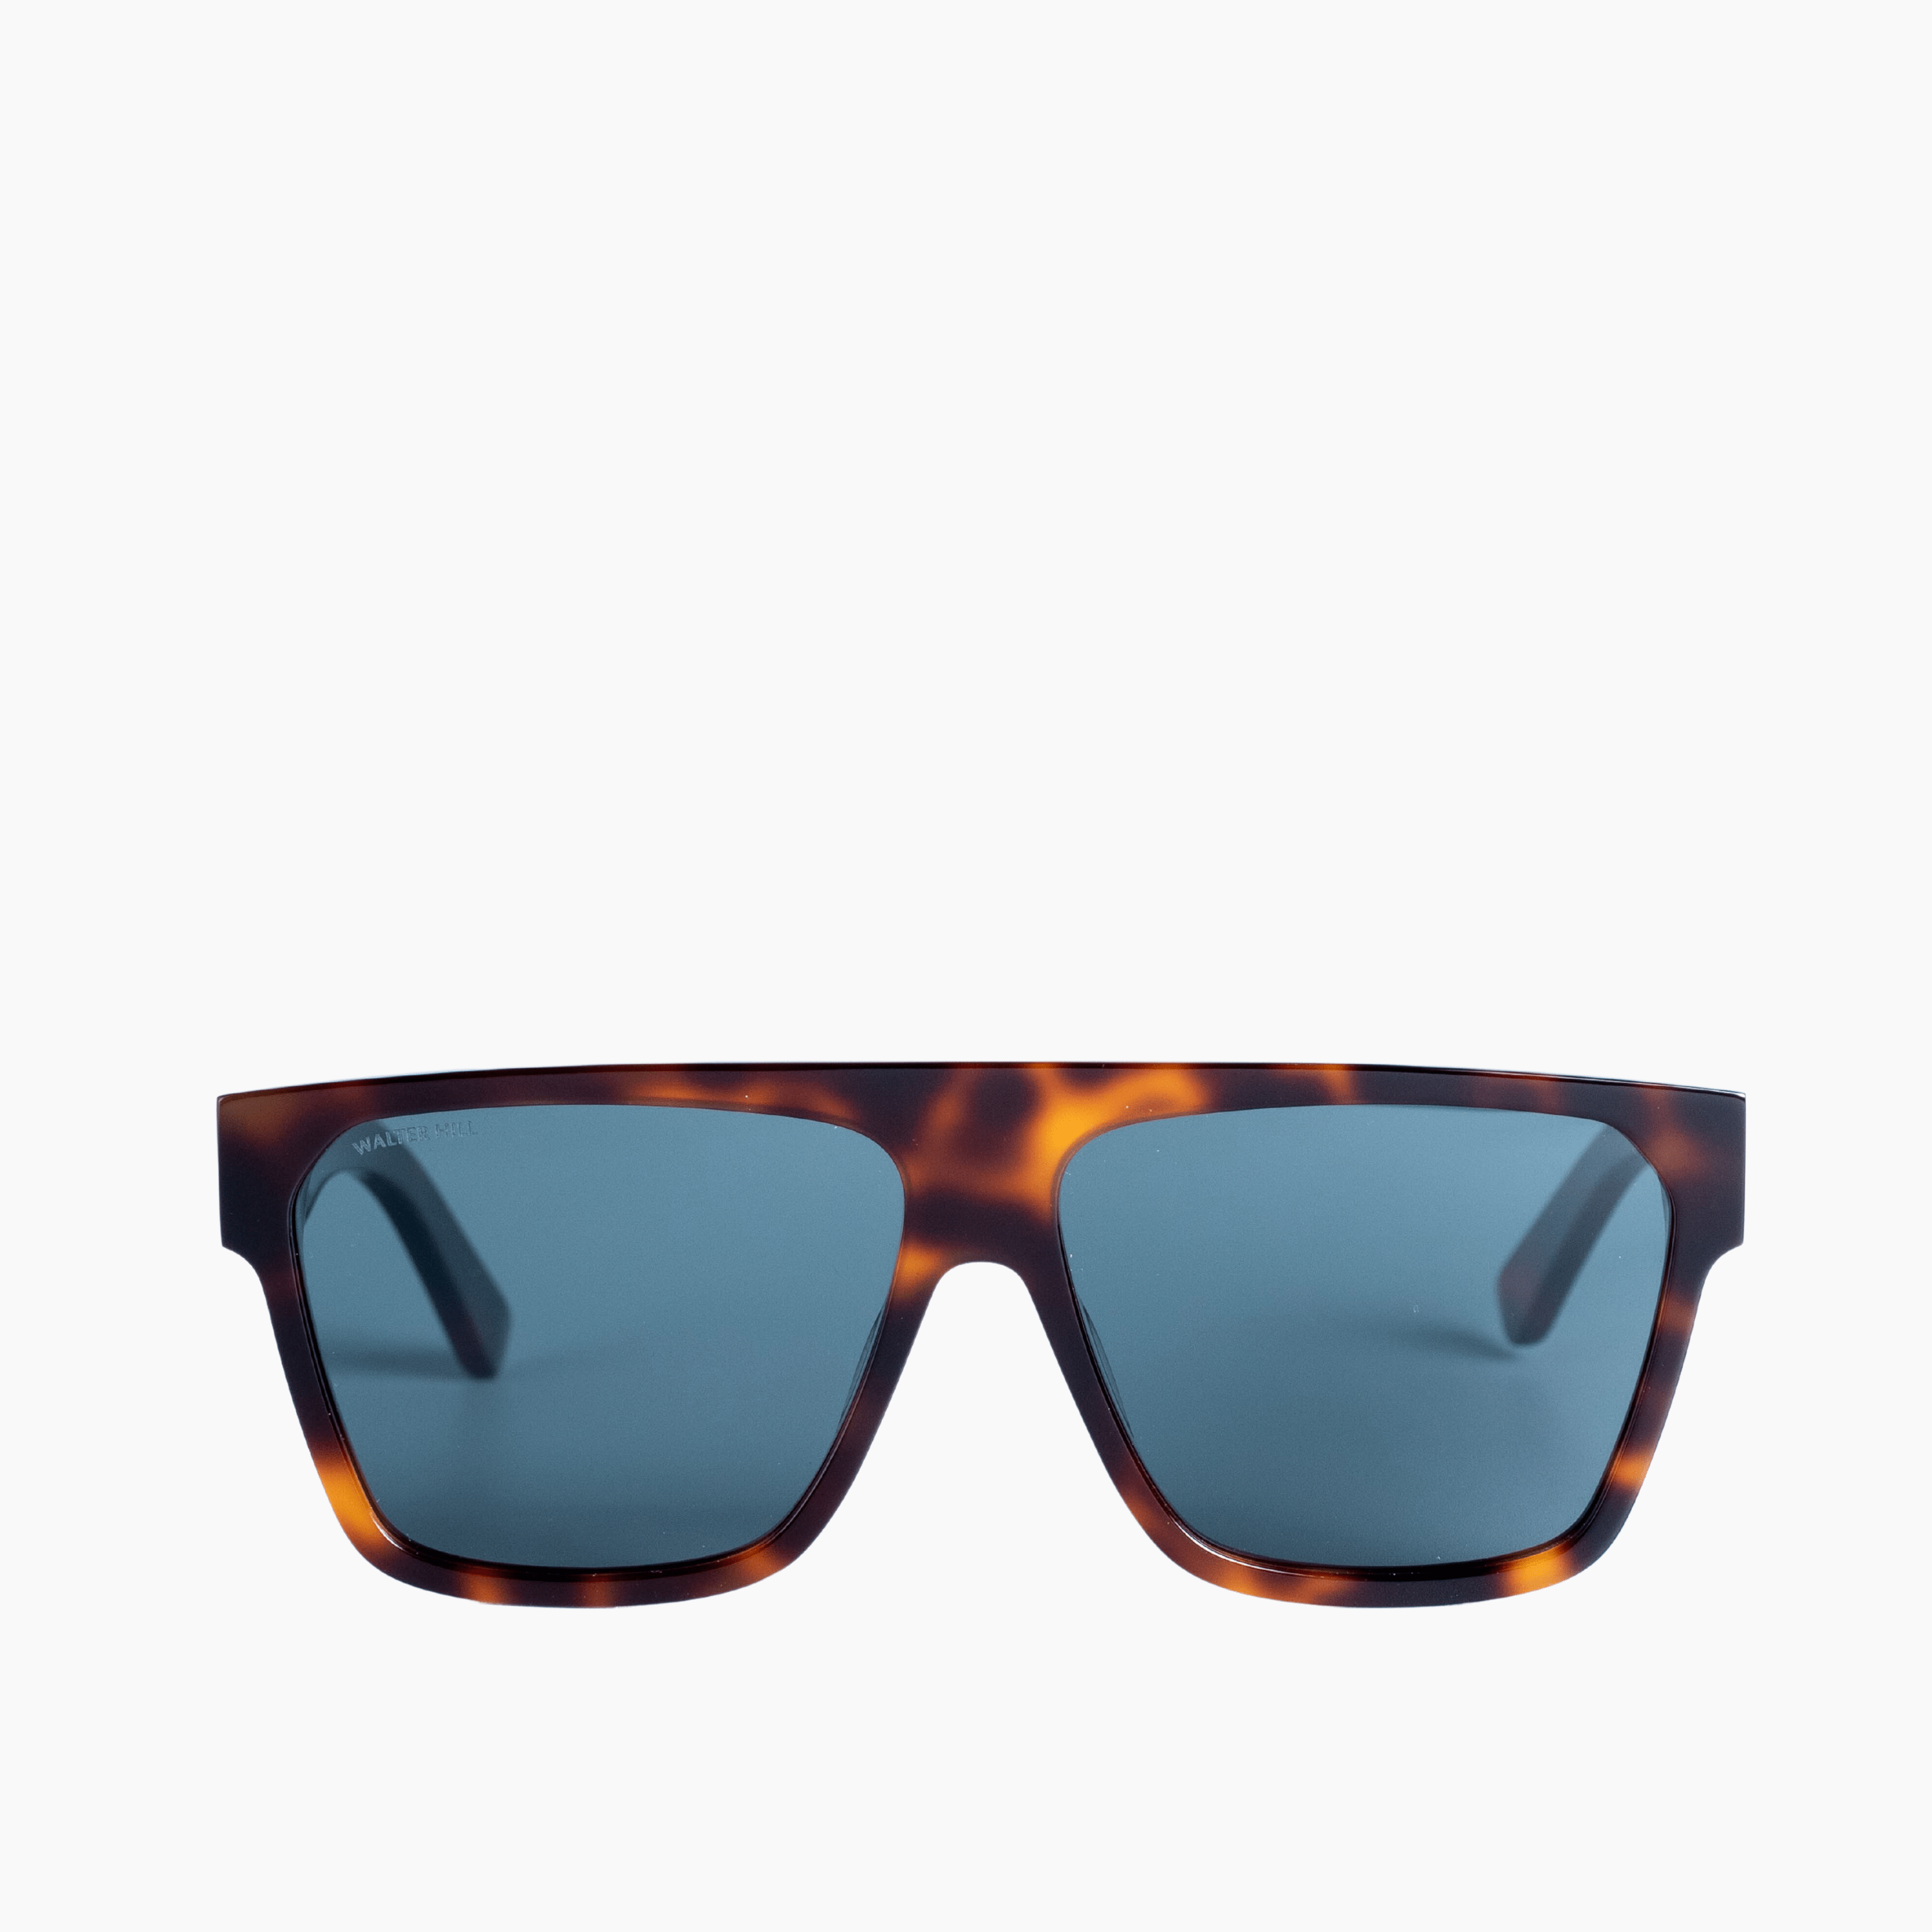 Walter Hill Sunglasses Oversized KAYA - Tortoise